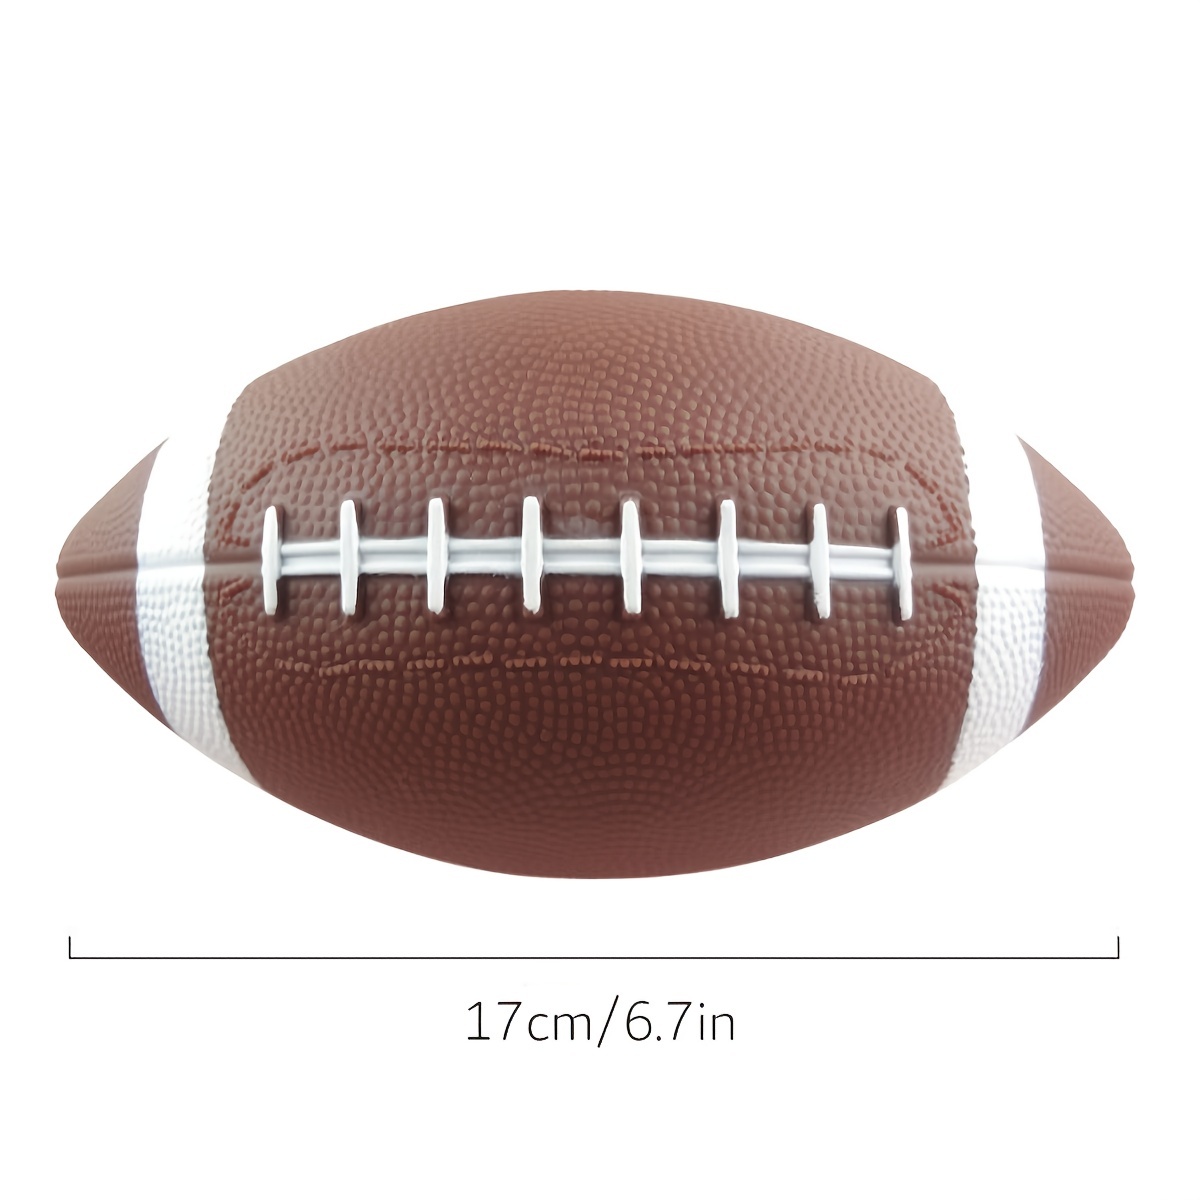 american football ball mini